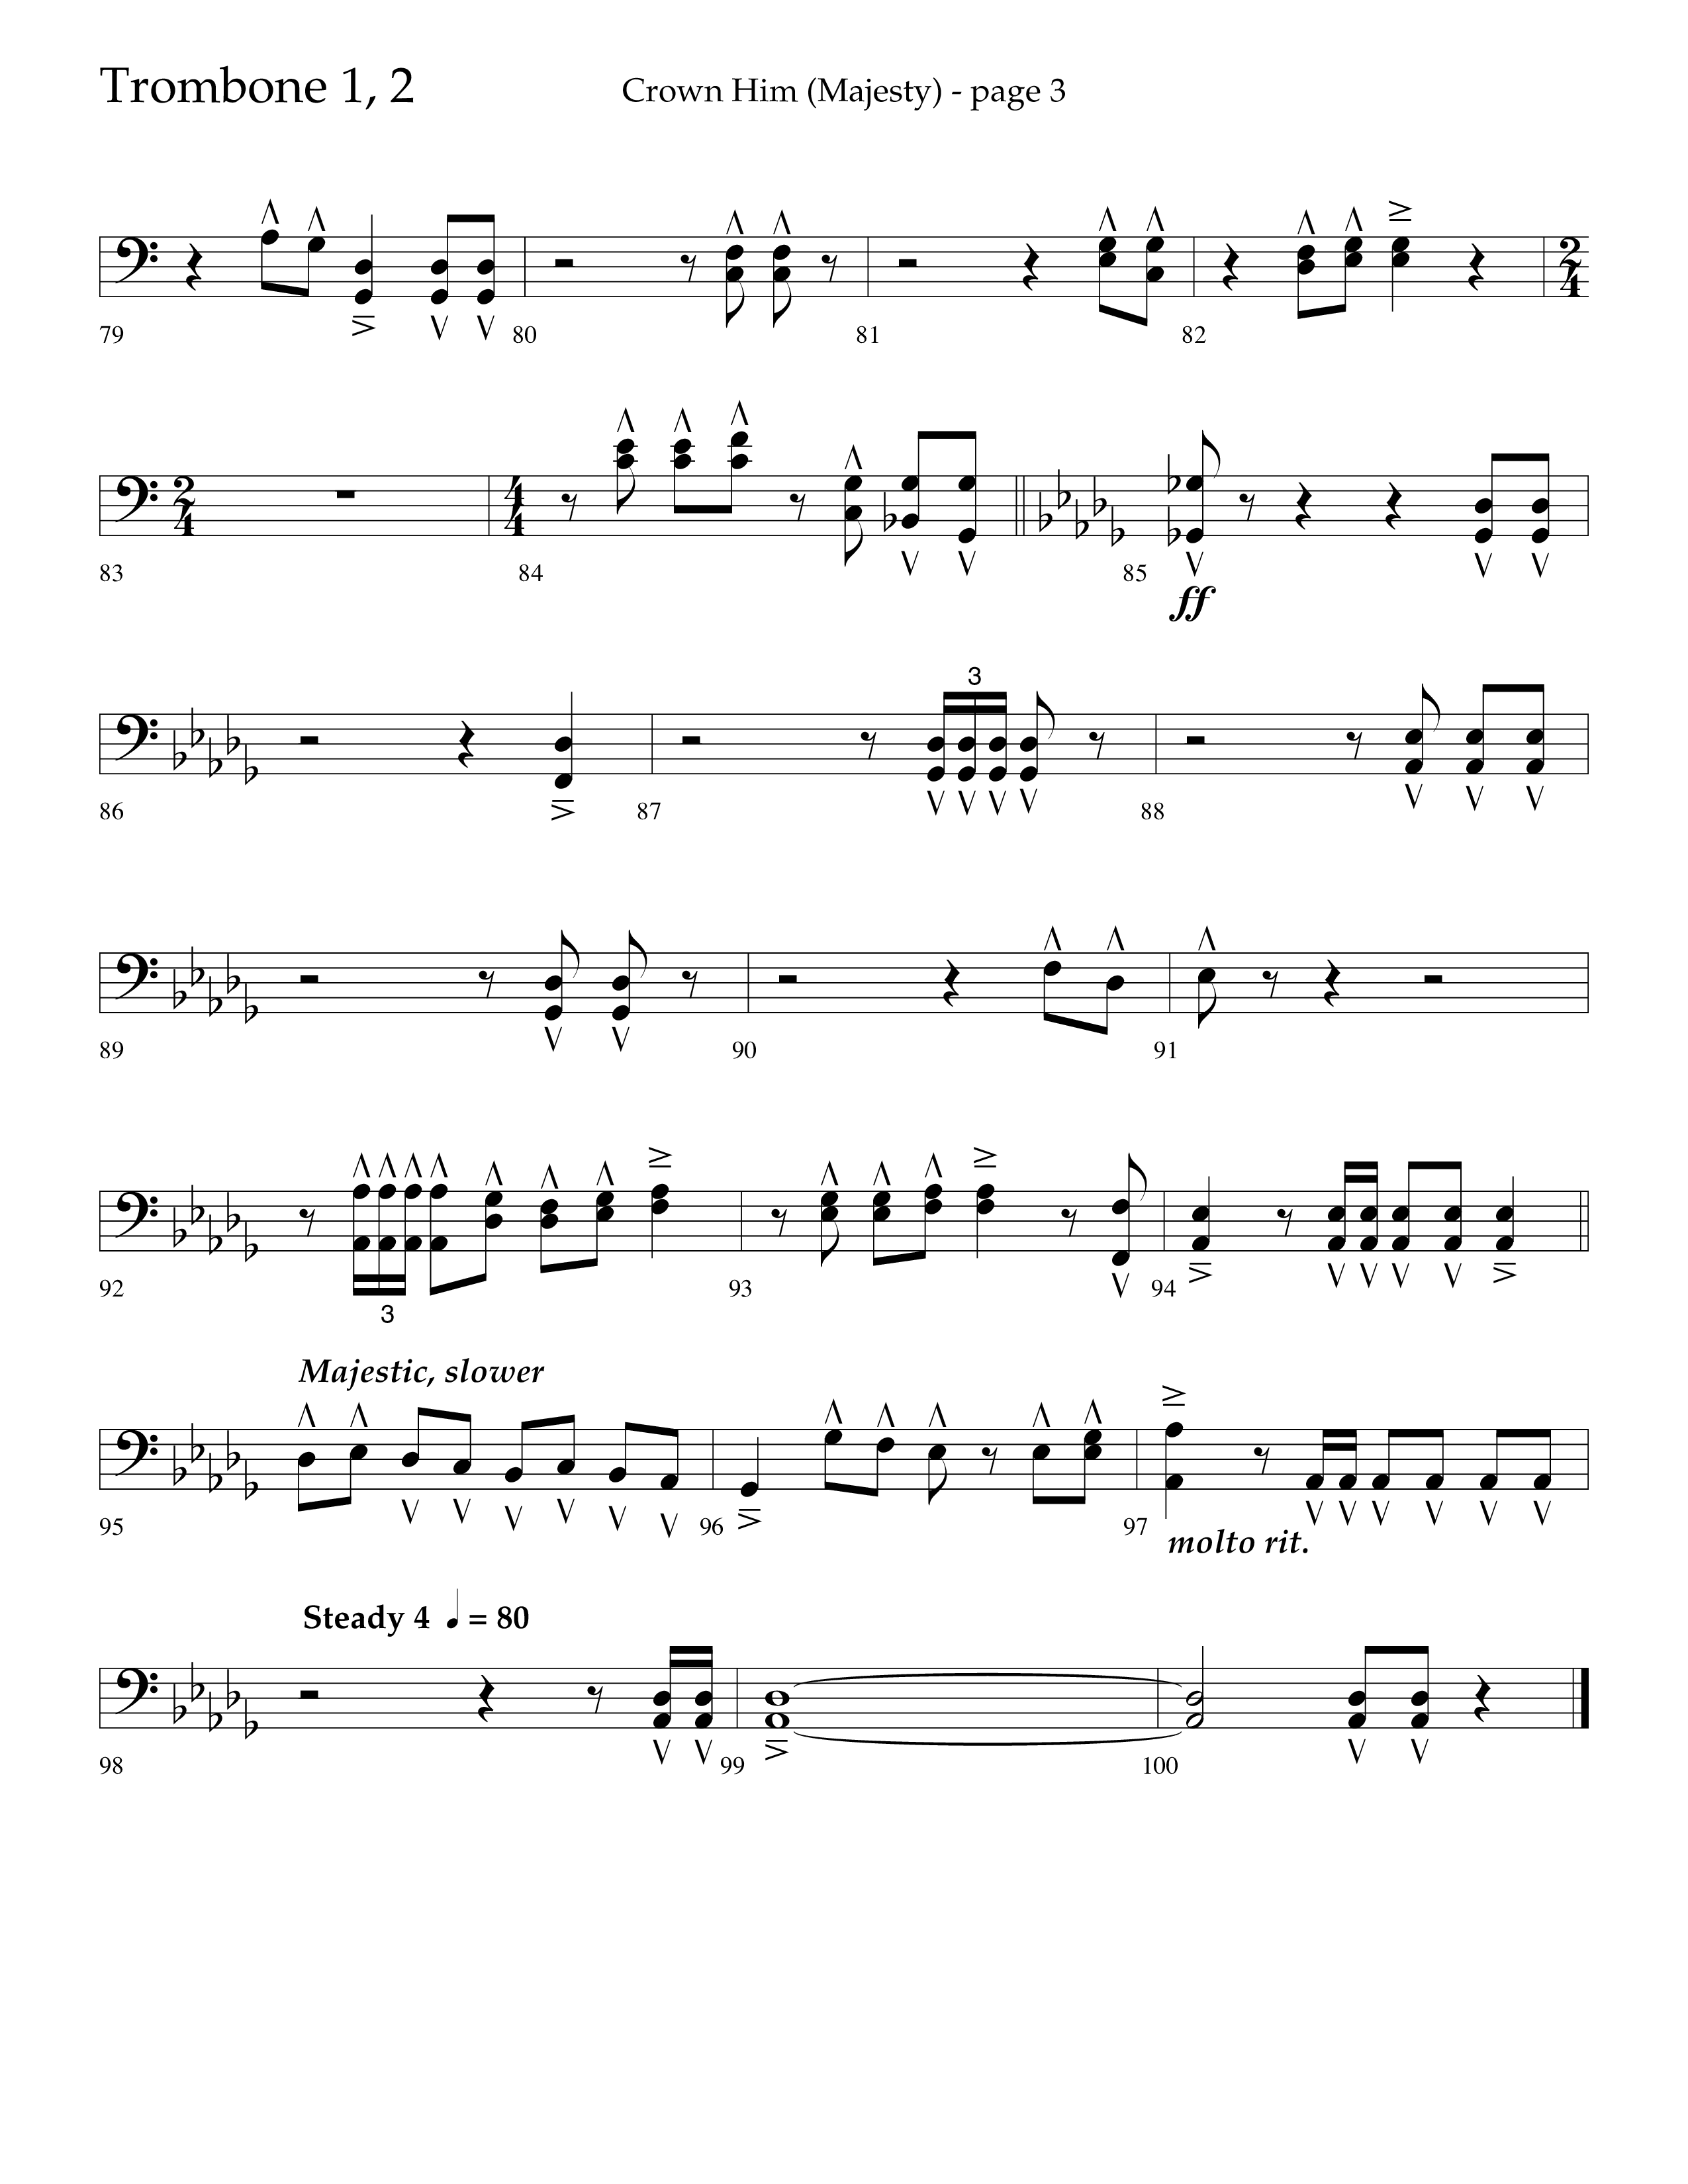 Crown Him (Majesty) (Choral Anthem SATB) Trombone 1/2 (Lifeway Choral / Arr. David T. Clydesdale)